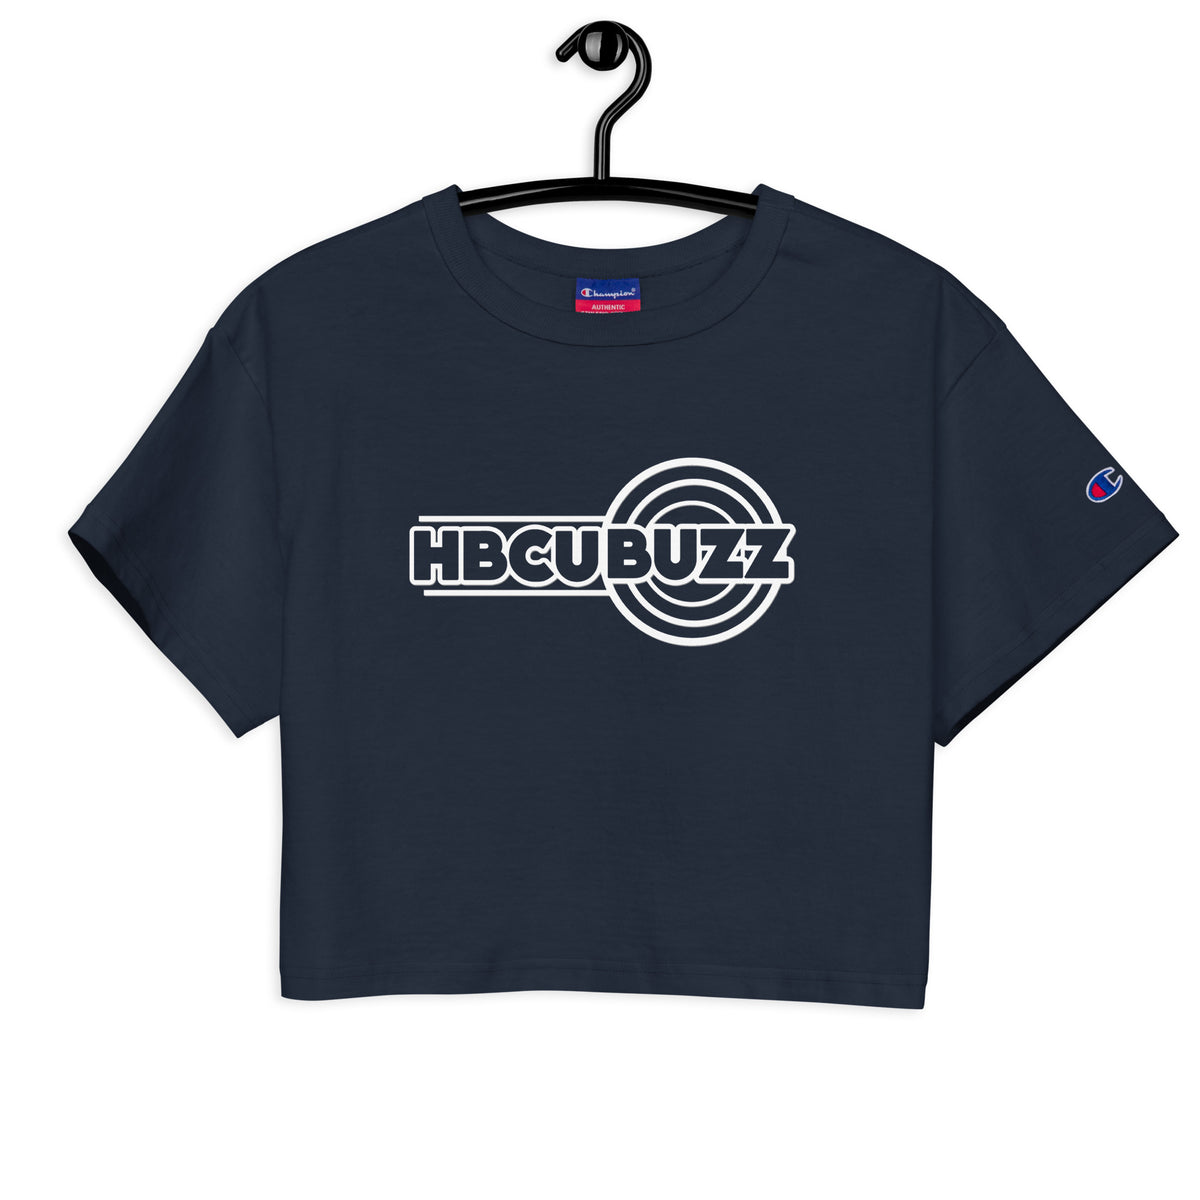 HBCU Buzz Champion Crop Top - HBCU Buzz Shop